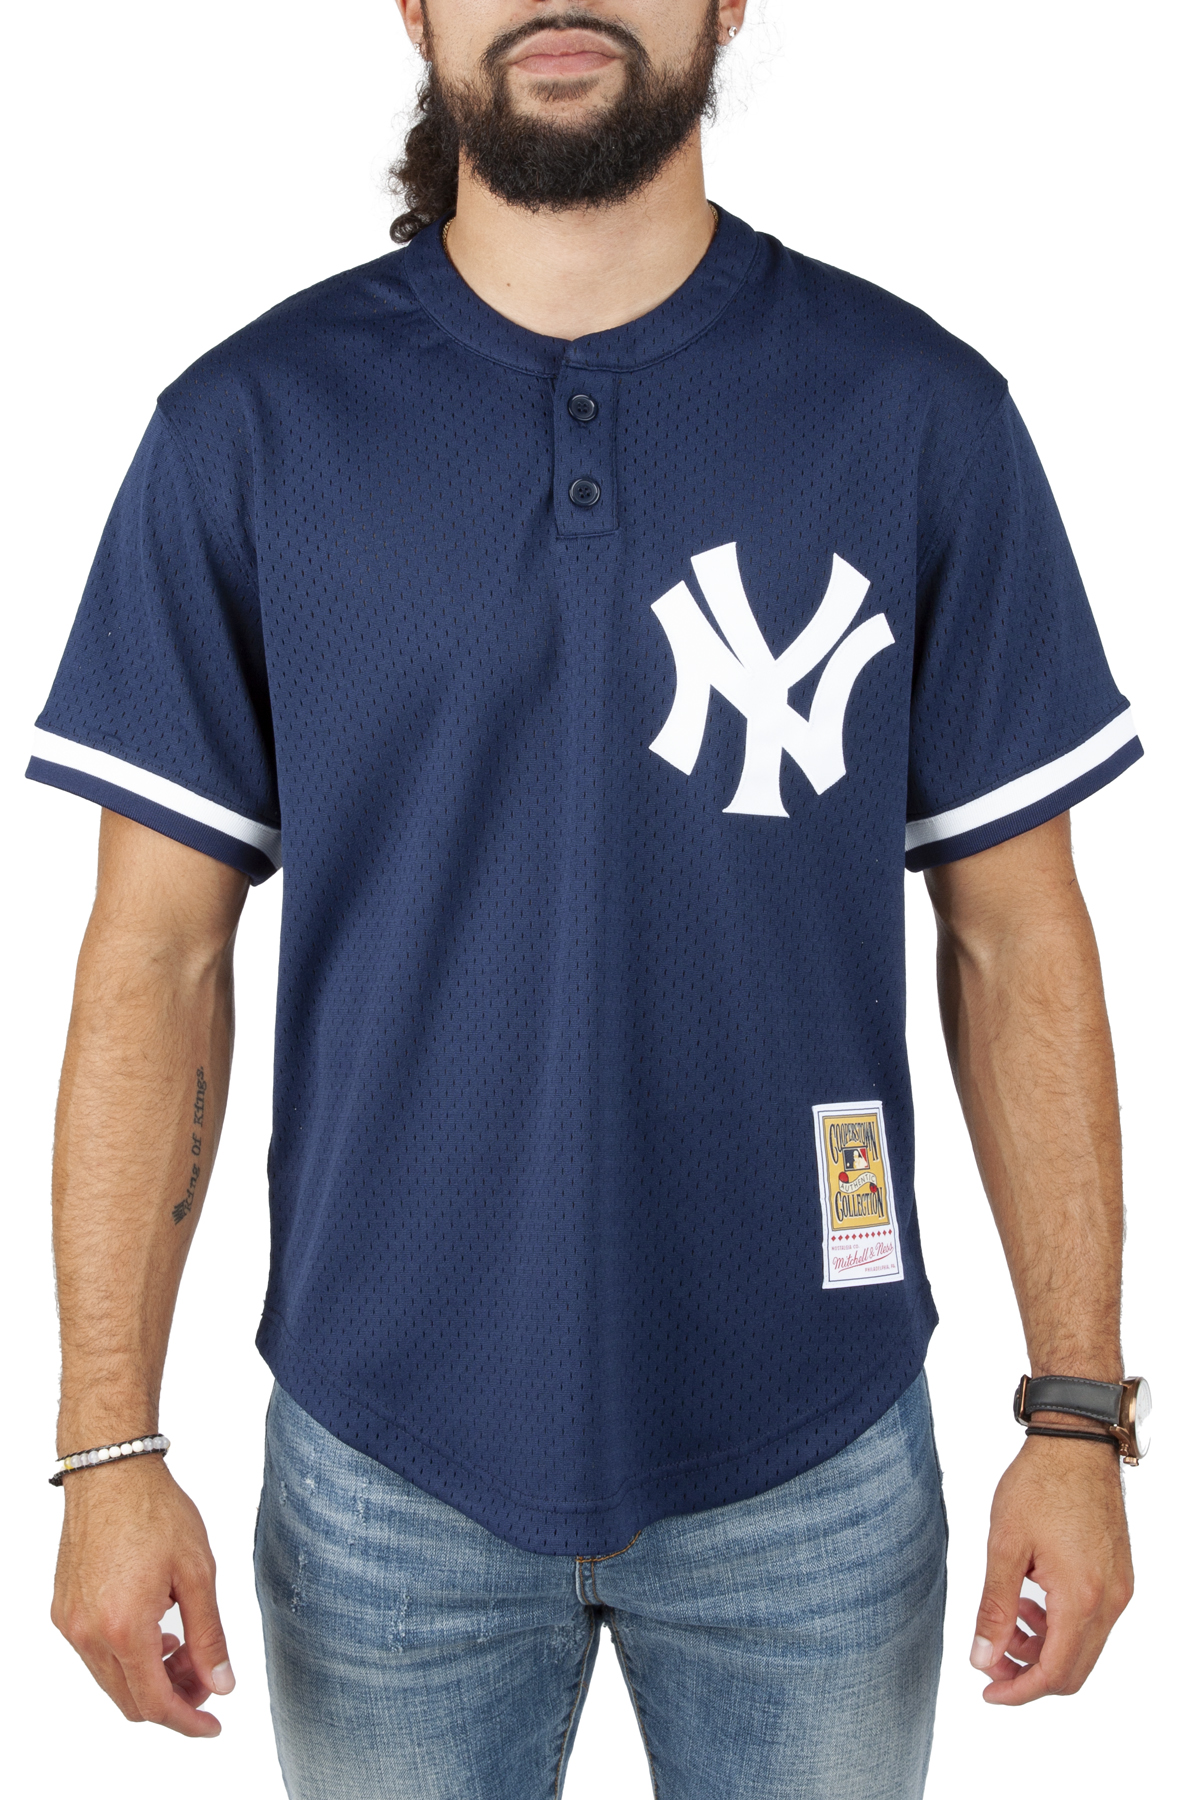 Mitchell & Ness New York Yankees 2009 Derek Jeter Authentic Pullover BP Jersey Navy